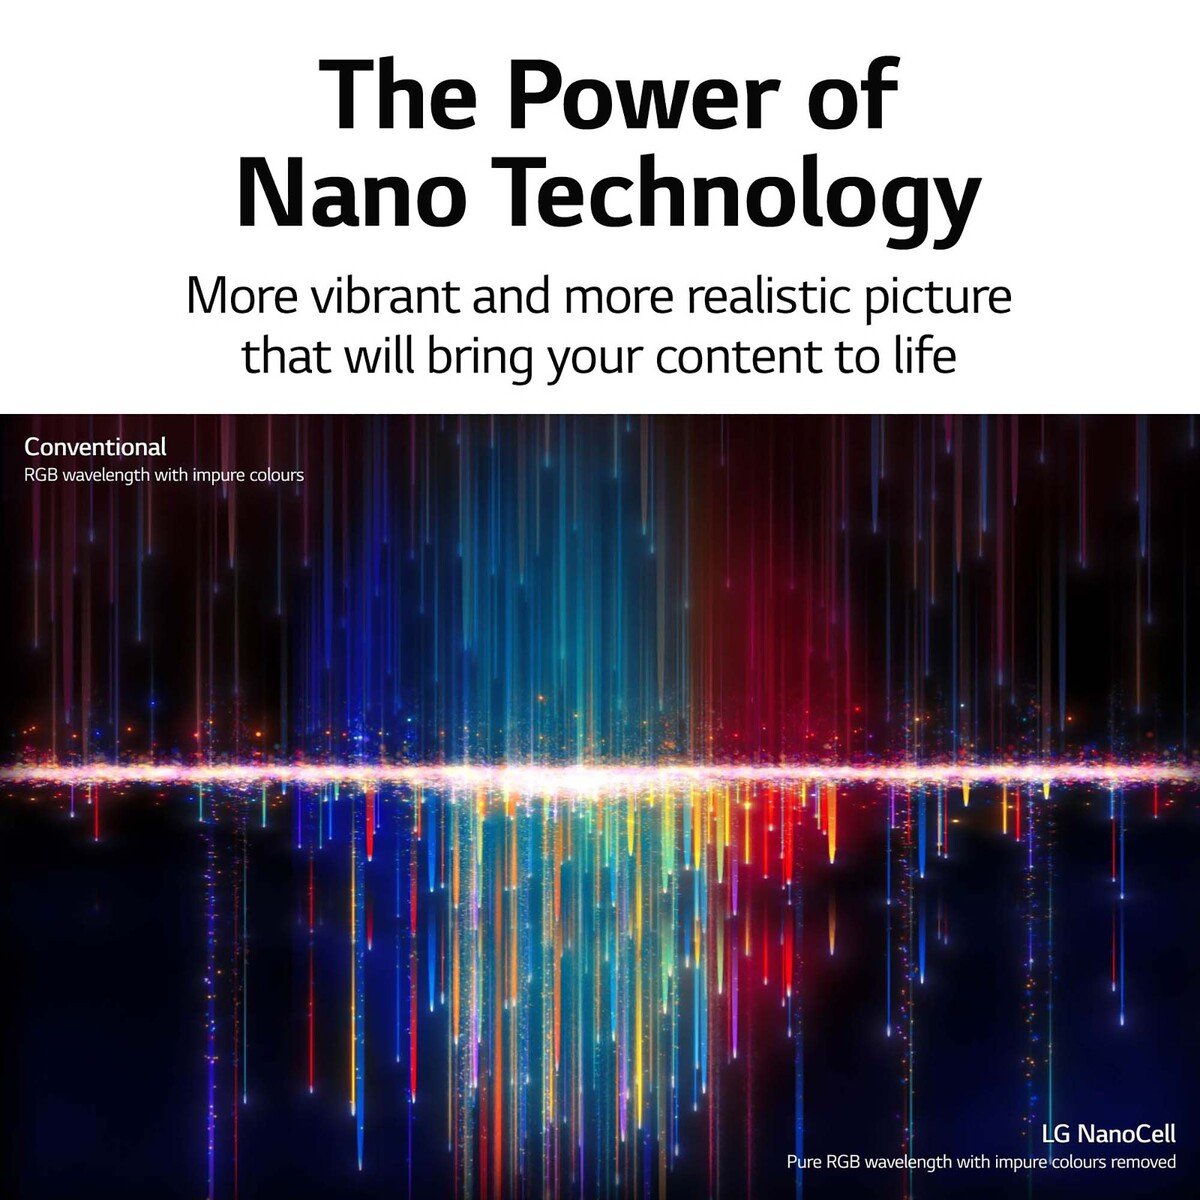 LG NANO85 65 Class HDR 4K UHD Smart NanoCell IPS LED